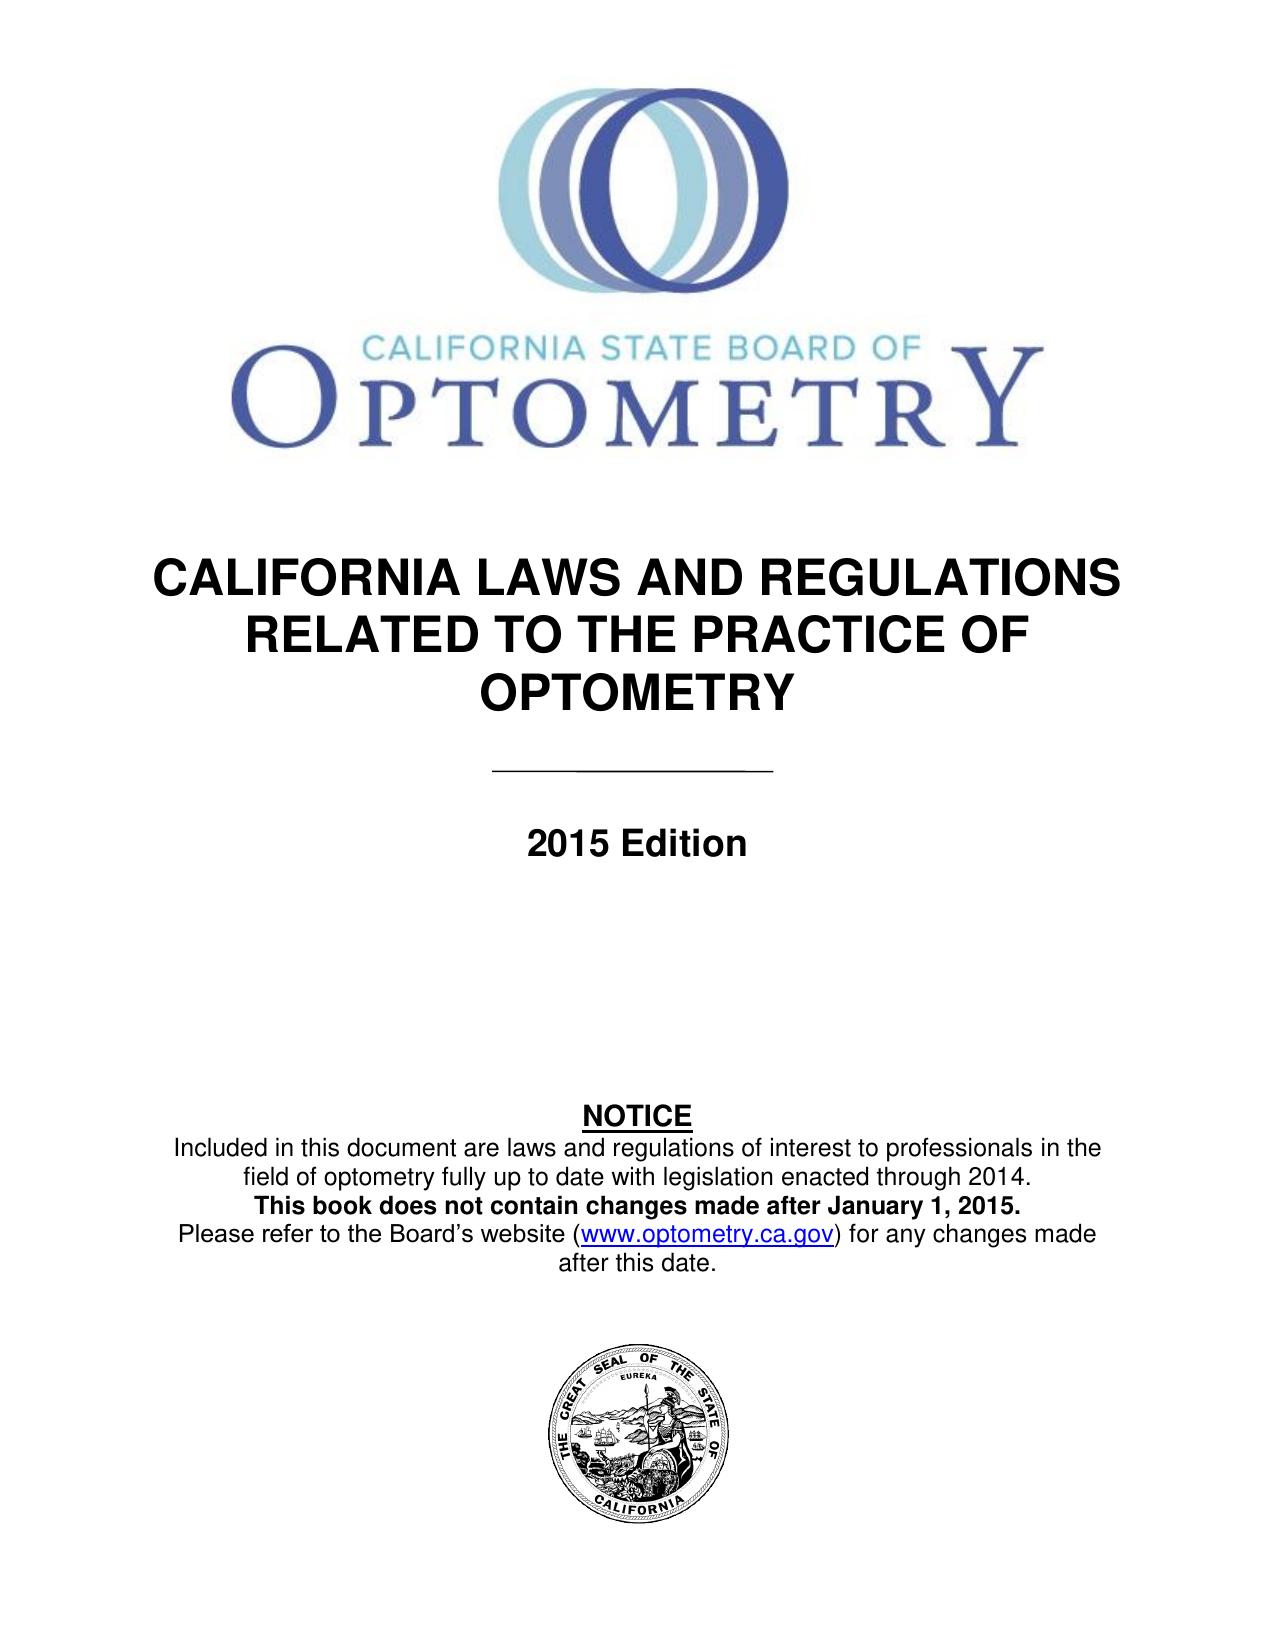 Board of Optometry - Optometry Laws and Regulations Book